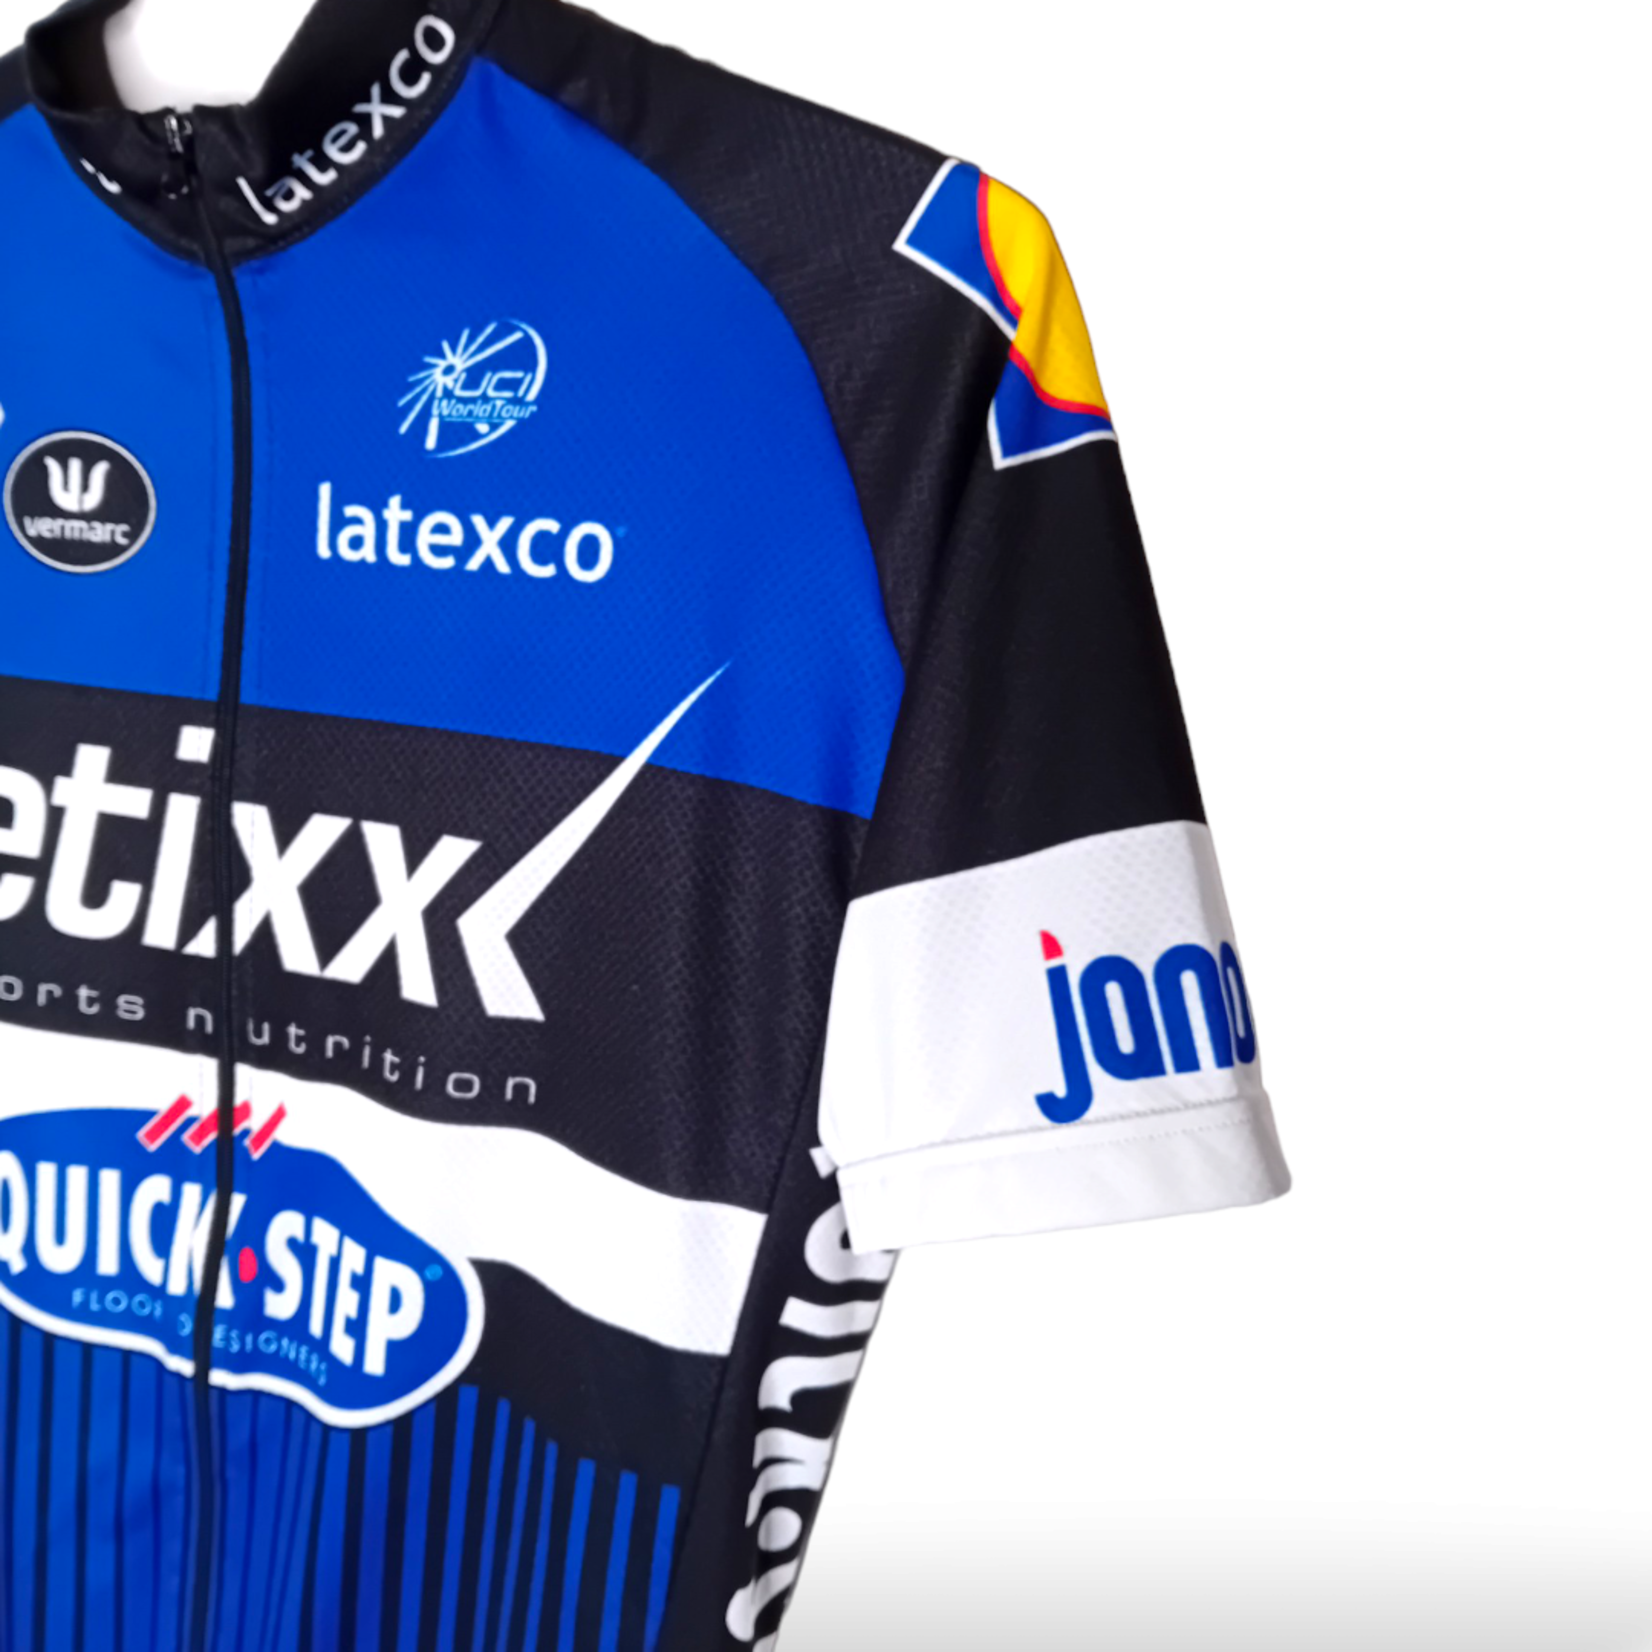 Vermarc Origineel Vermarc vintage wielershirt Etixx-Quick Step 2016